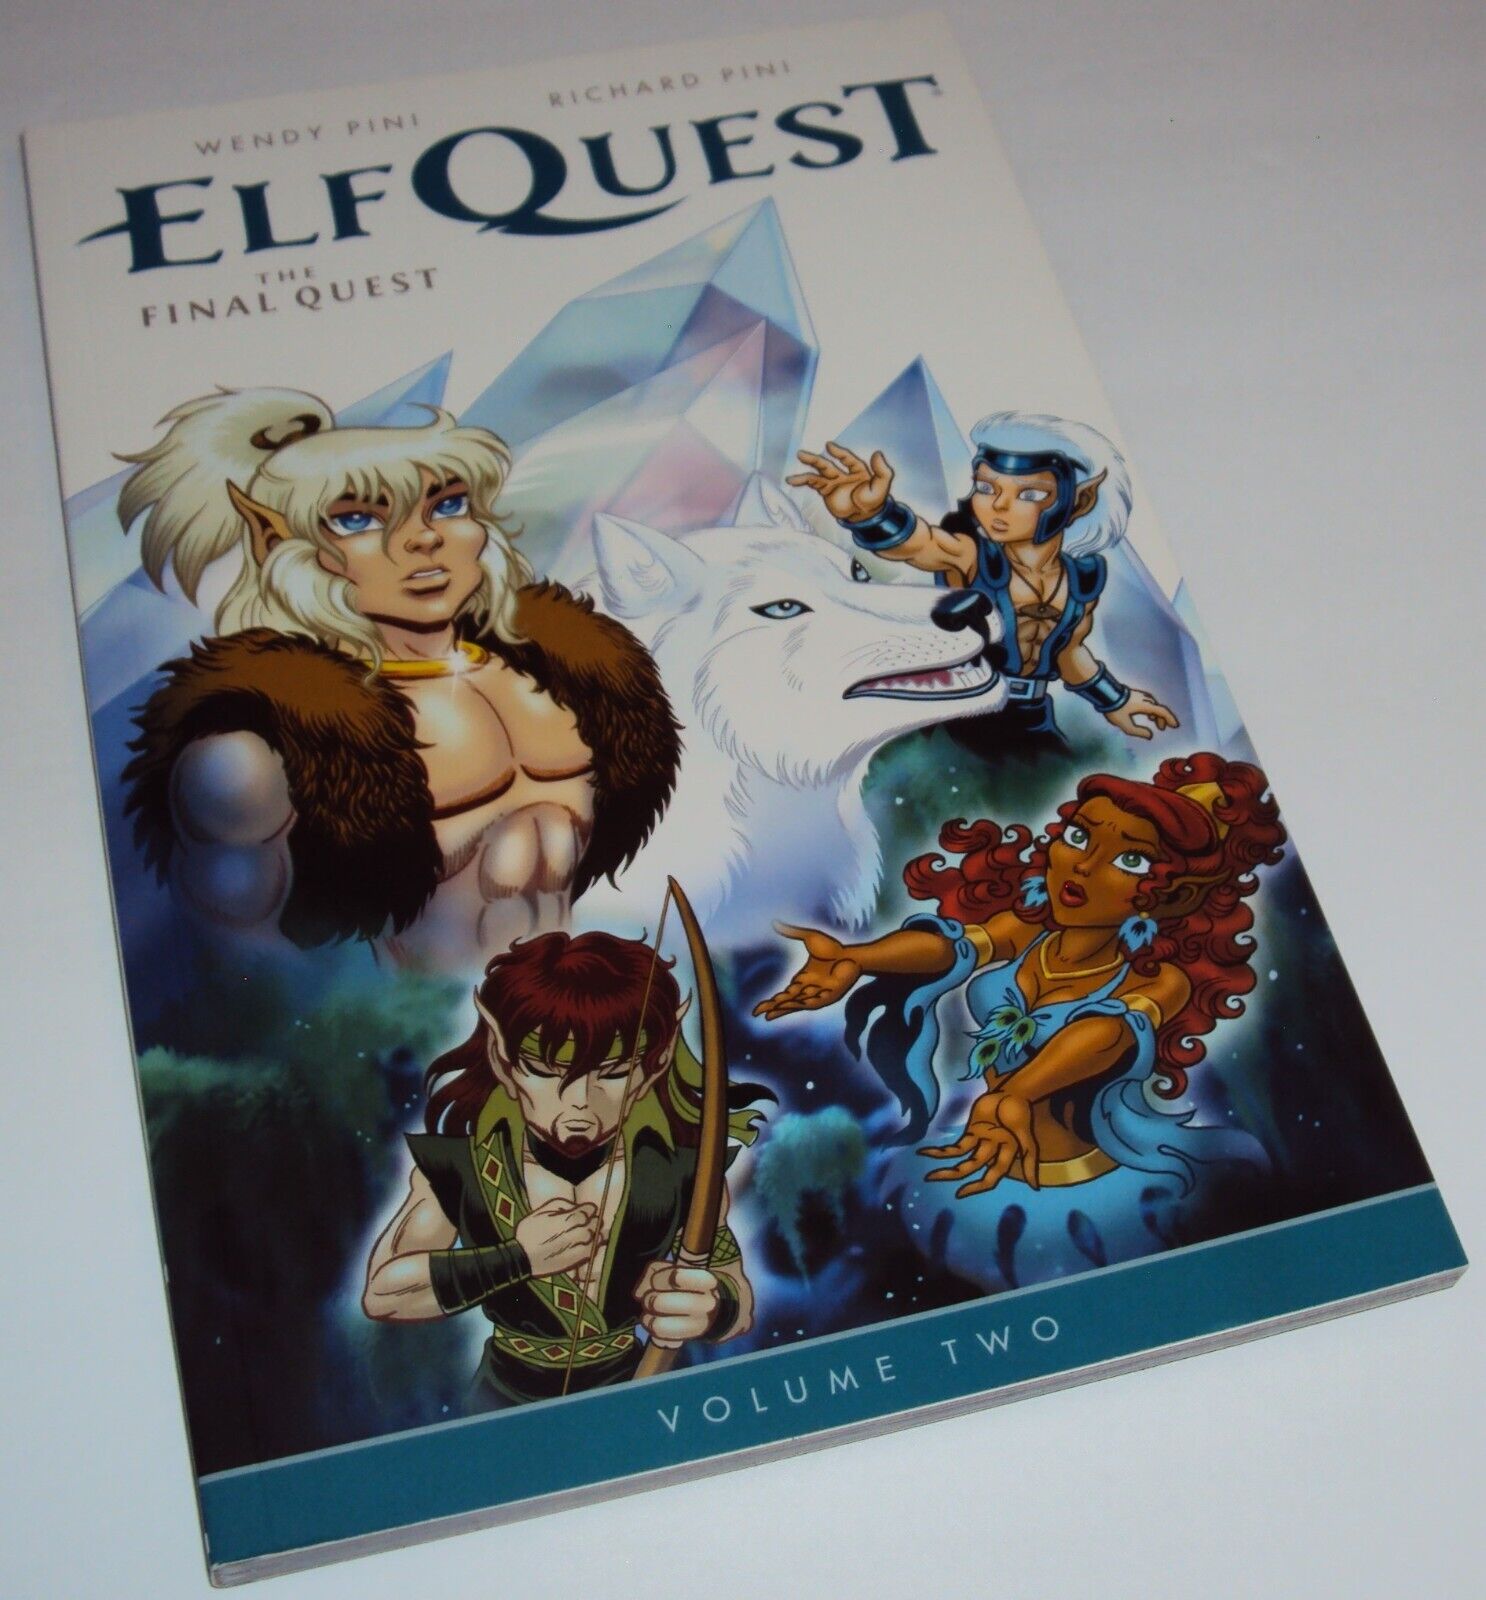 Elfquest The Final Quest Vol. # 2 Two Wendy Pini Richard Dark Horse Comics Book